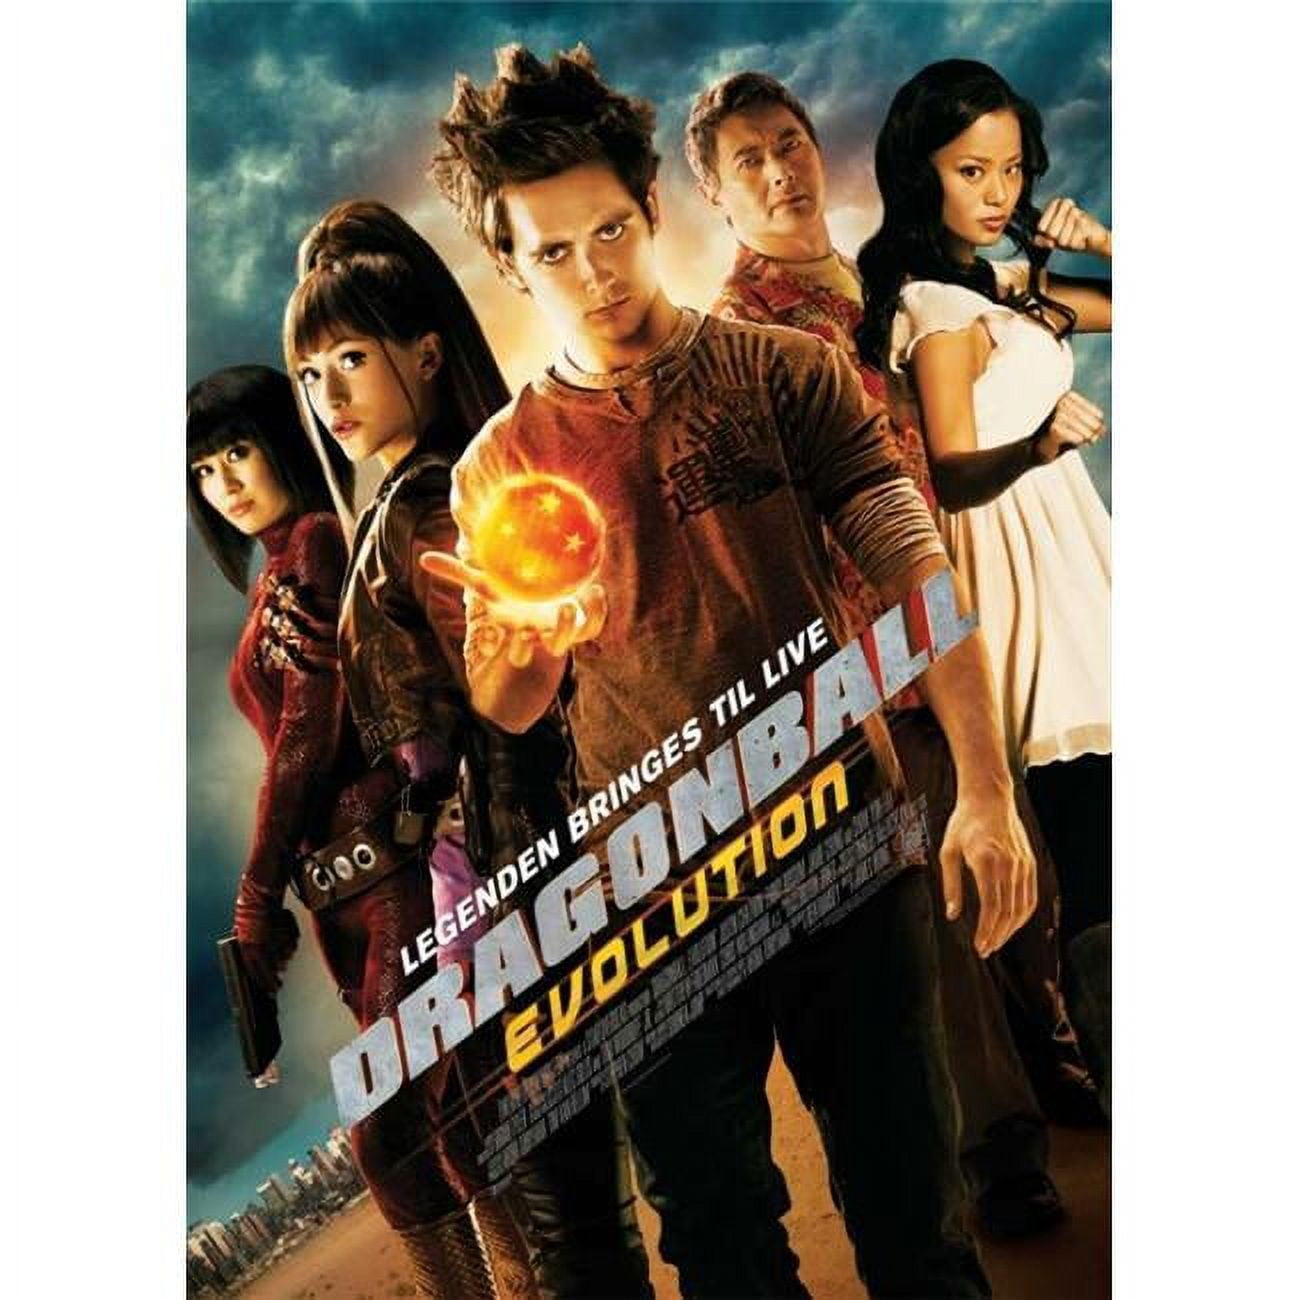 Dragonball Evolution - movie POSTER (Style C) (27 x 40) (2009) 